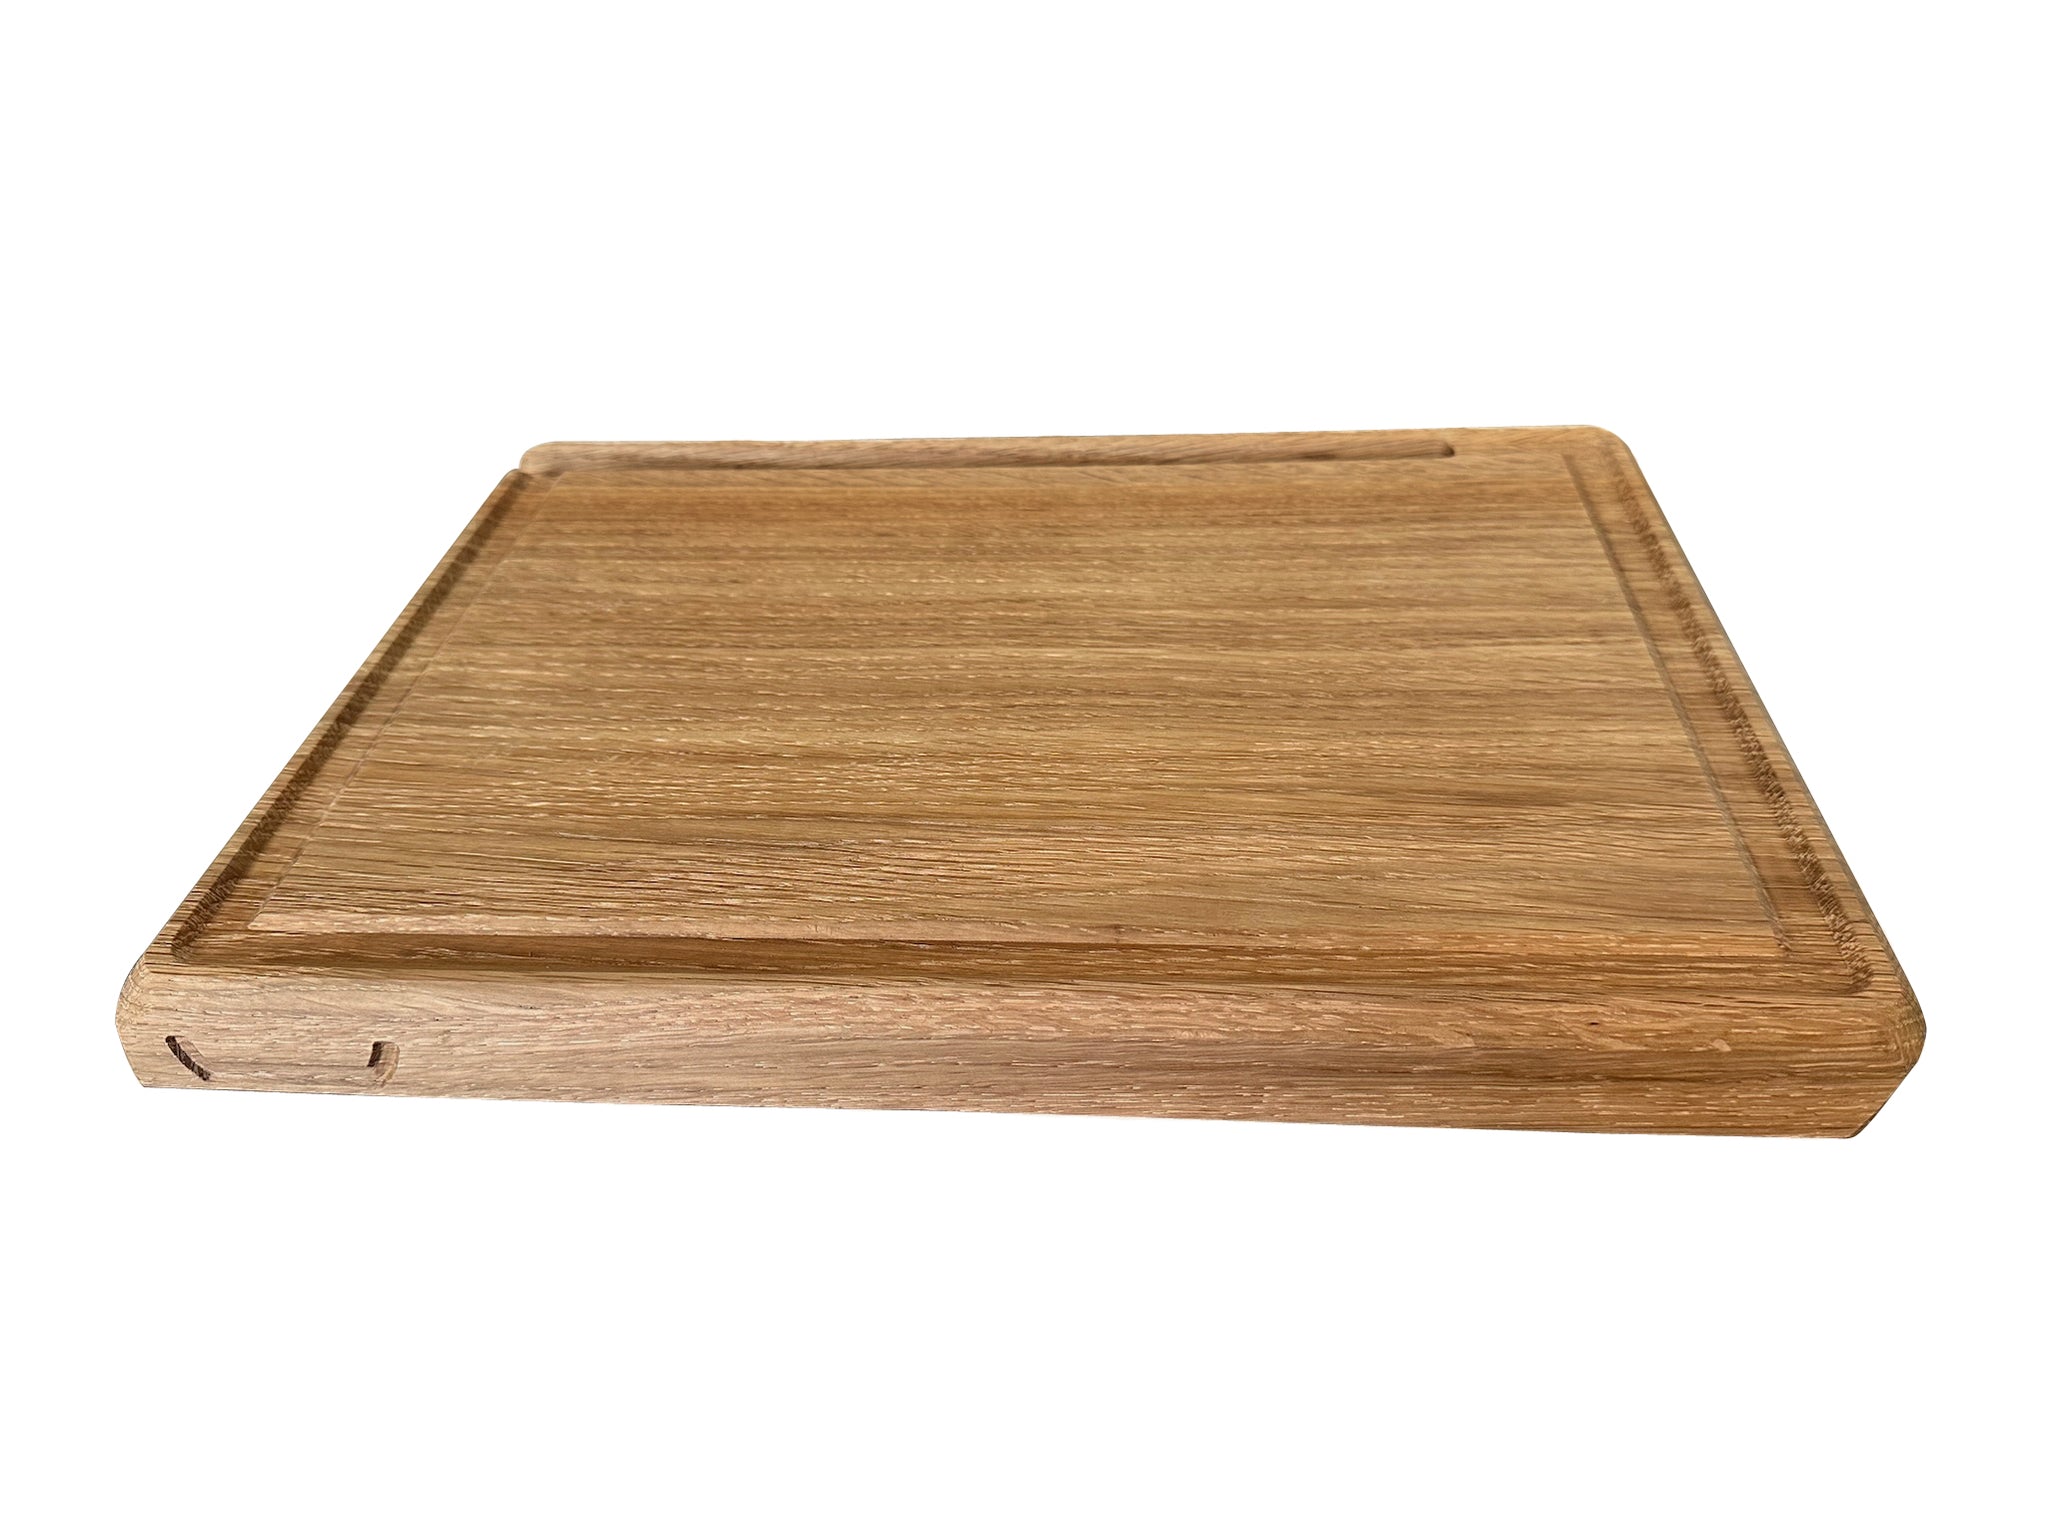 12 deg Cutting Board with Integrated iPad Groove